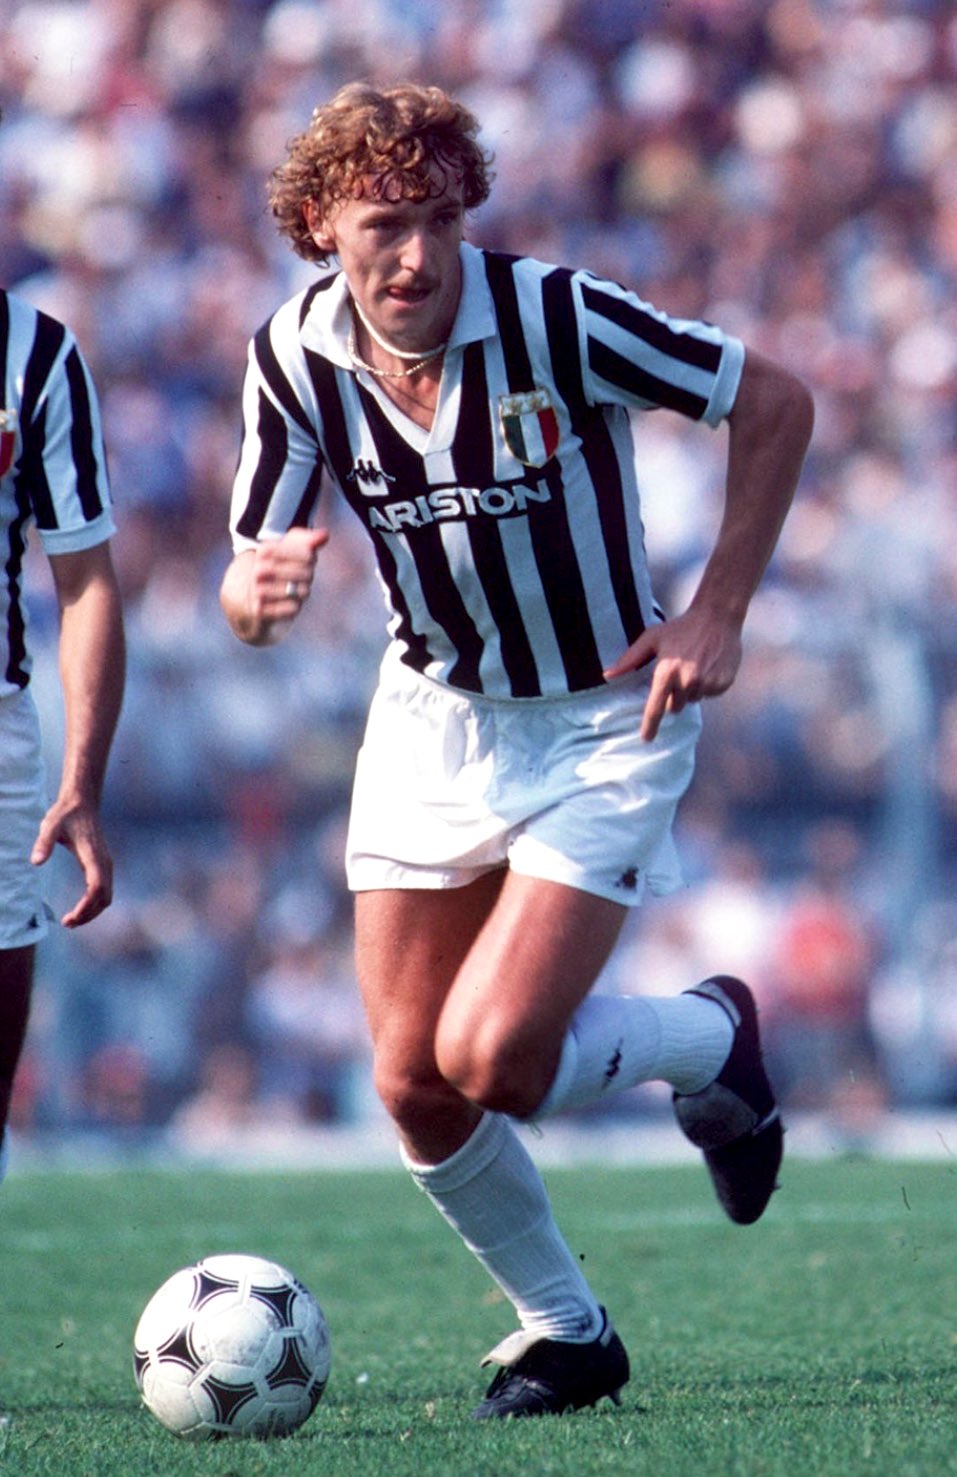 Football Memories on Twitter: "Zbigniew Boniek in action for Juventus # Juventus #Juve https://t.co/XwlRN5qQC5" / Twitter